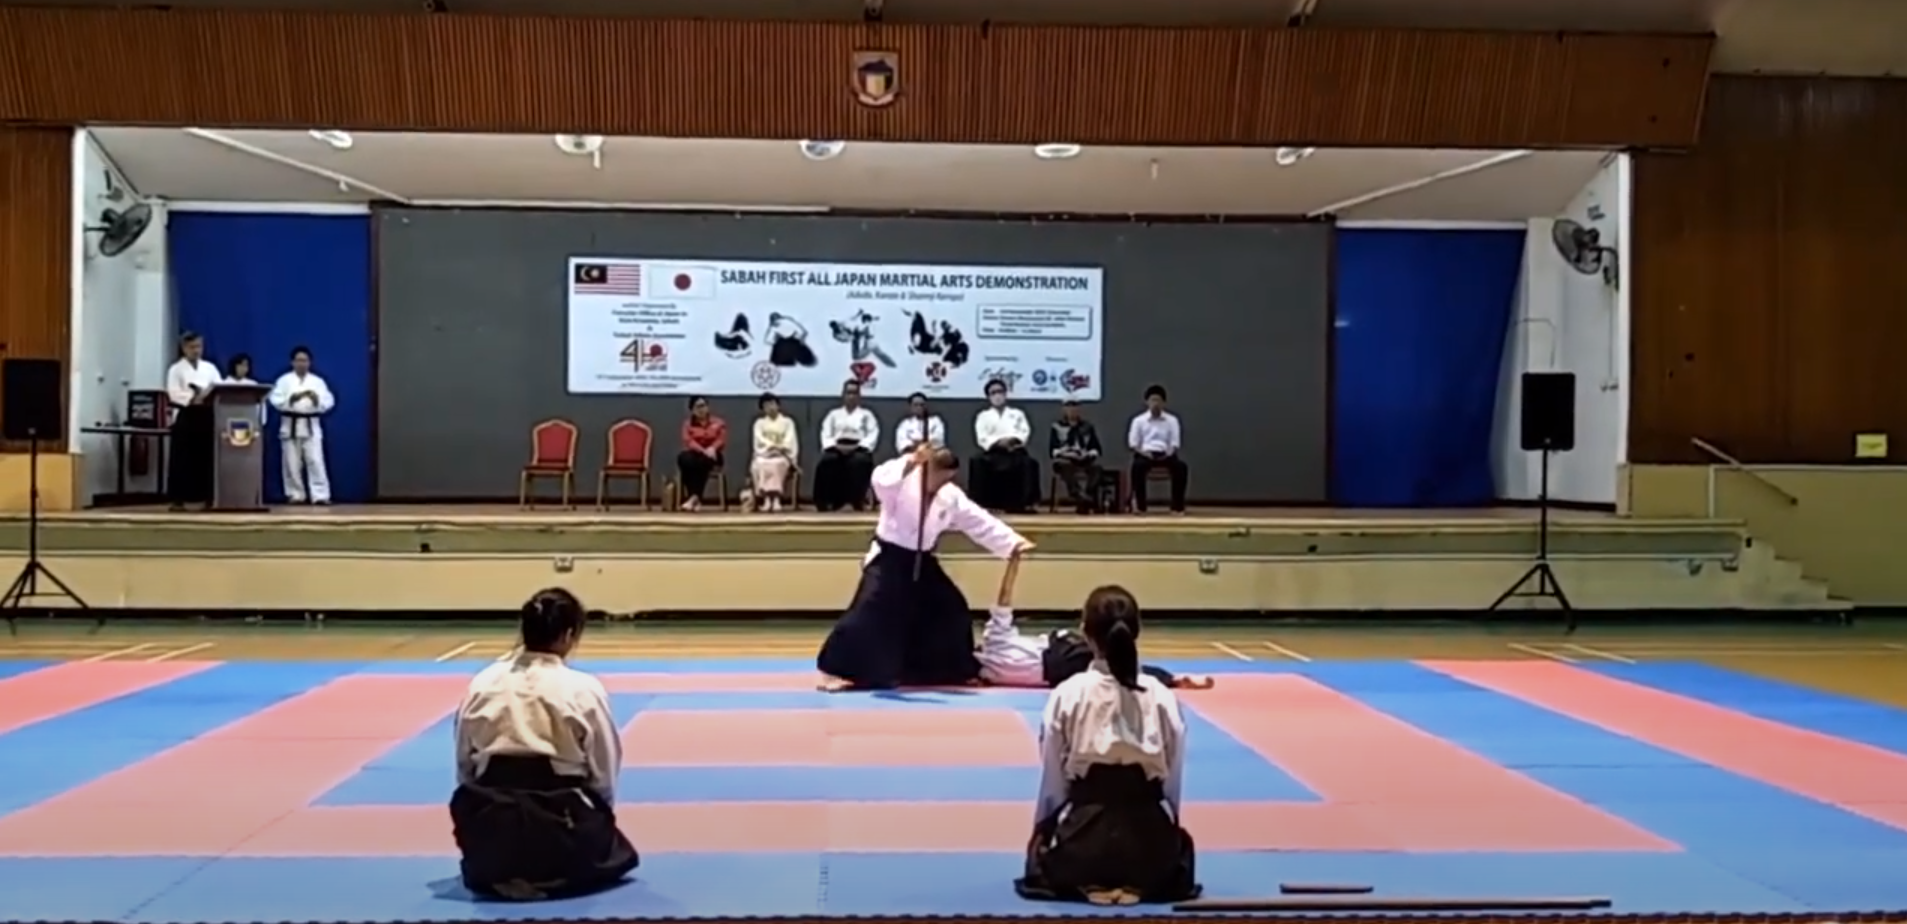 Sabah First All Japan Martial Arts Demonstration 2022